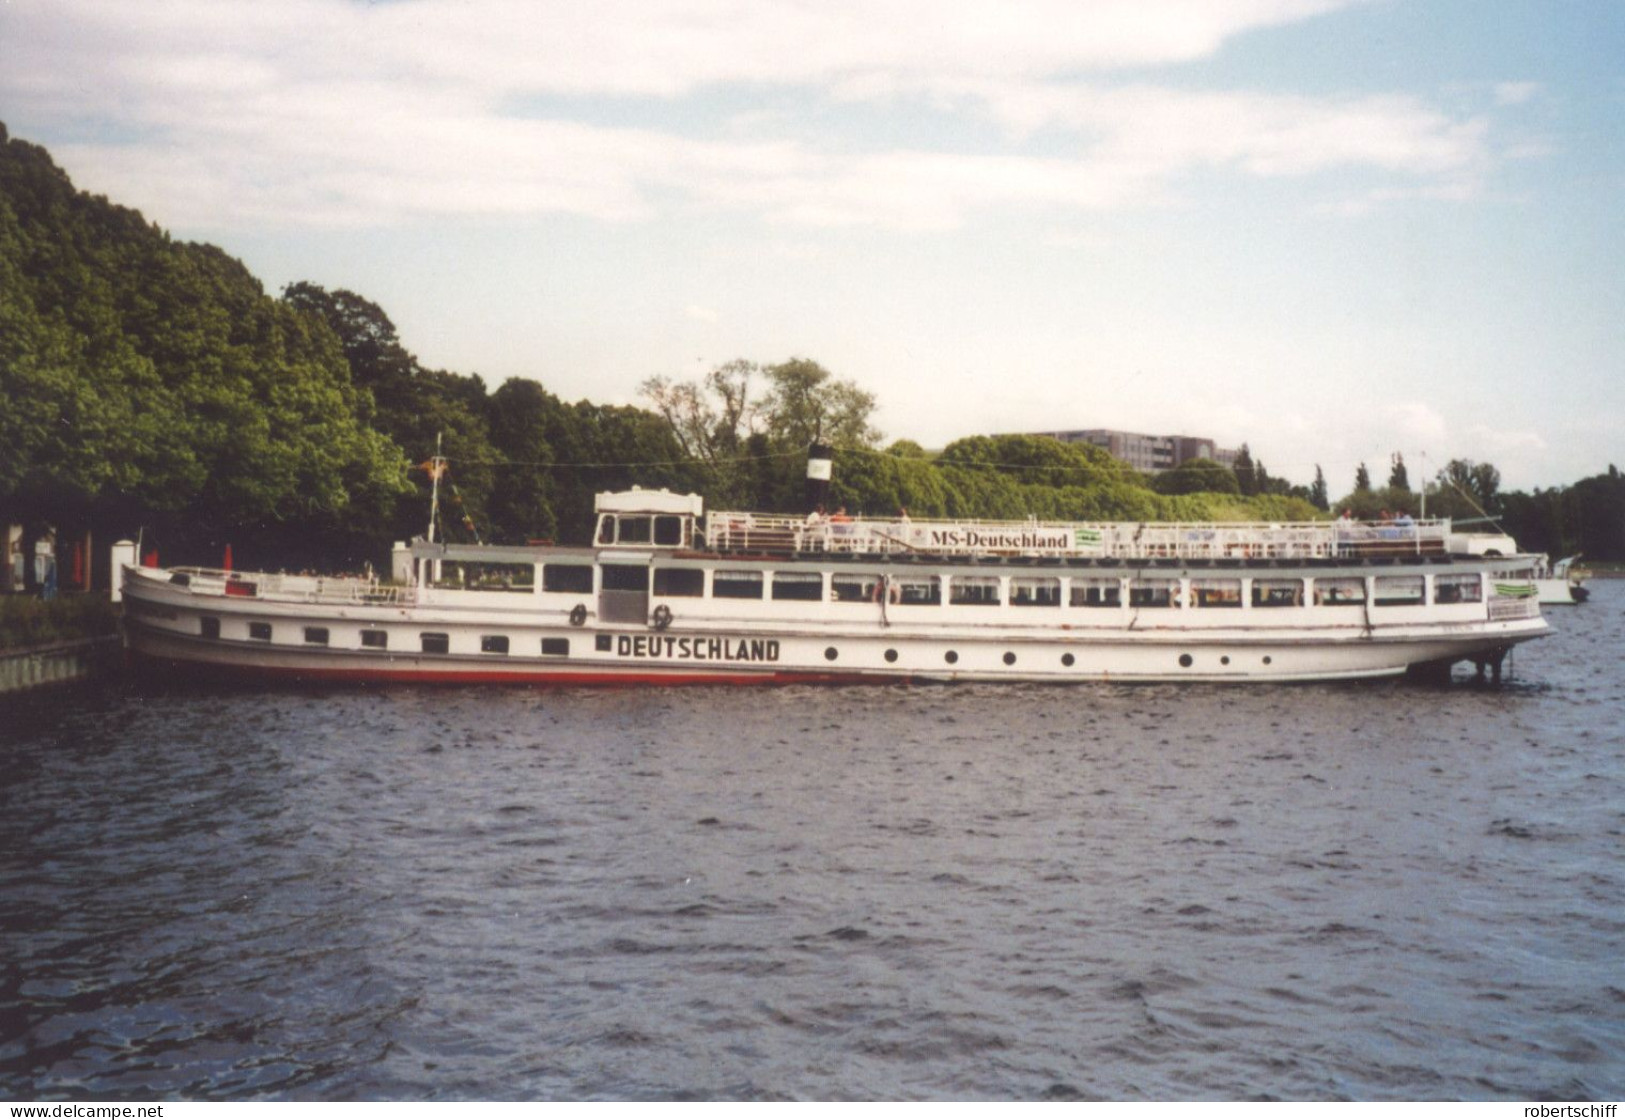 Foto Motorschiff Deutschland, Fahrgastschiff, Berlin Tegel - Boats